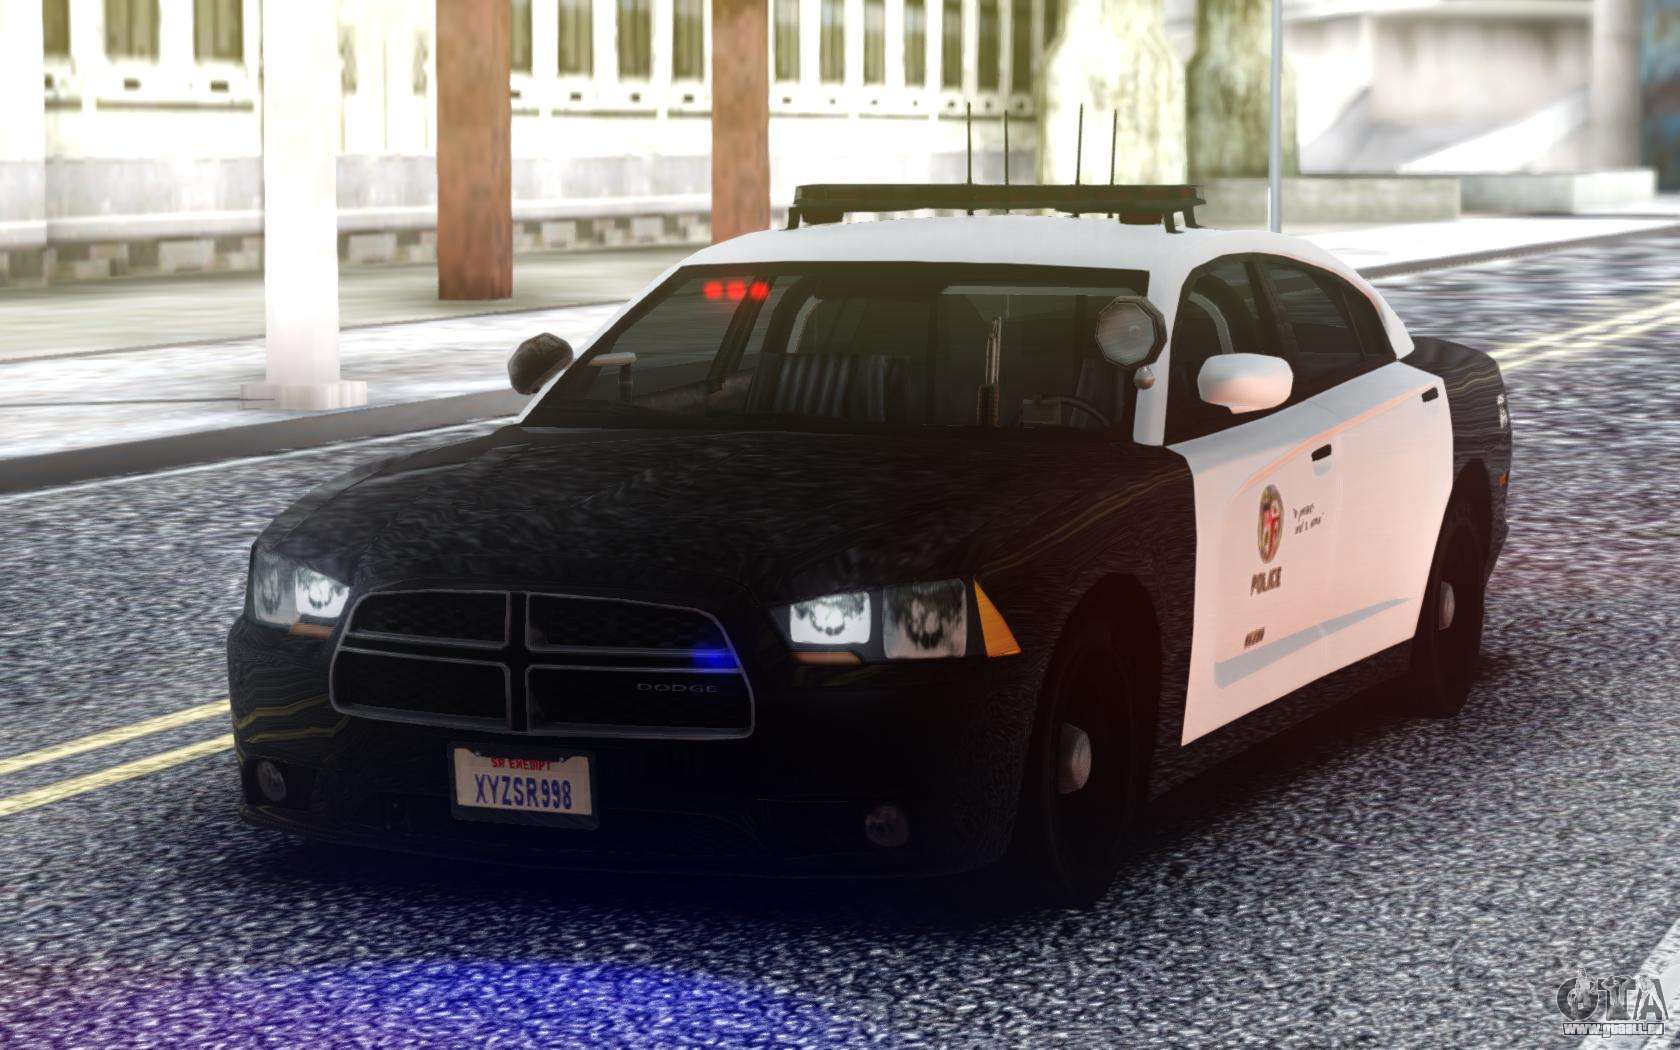 Спб пд. Dodge Charger srt8 Police. Dodge Charger srt8 2012 Police. Dodge Charger Police GTA sa. Dodge Charger srt8 перехватчик.